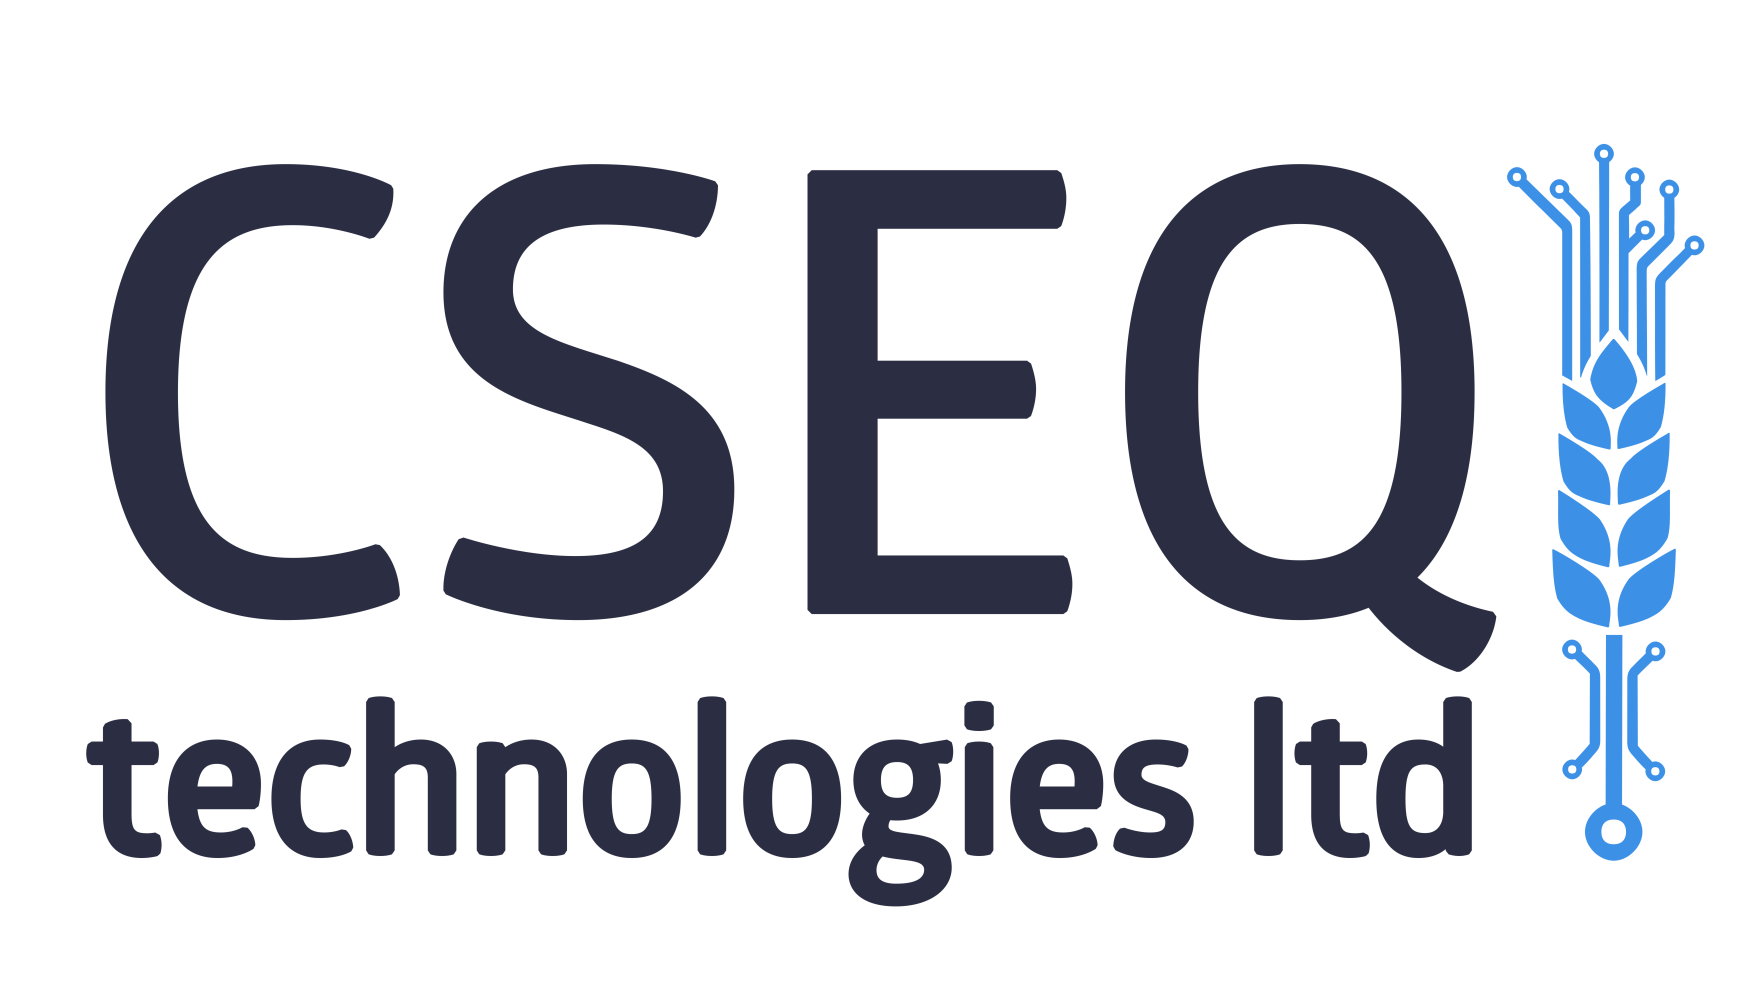 CSEQ Technologies Ltd